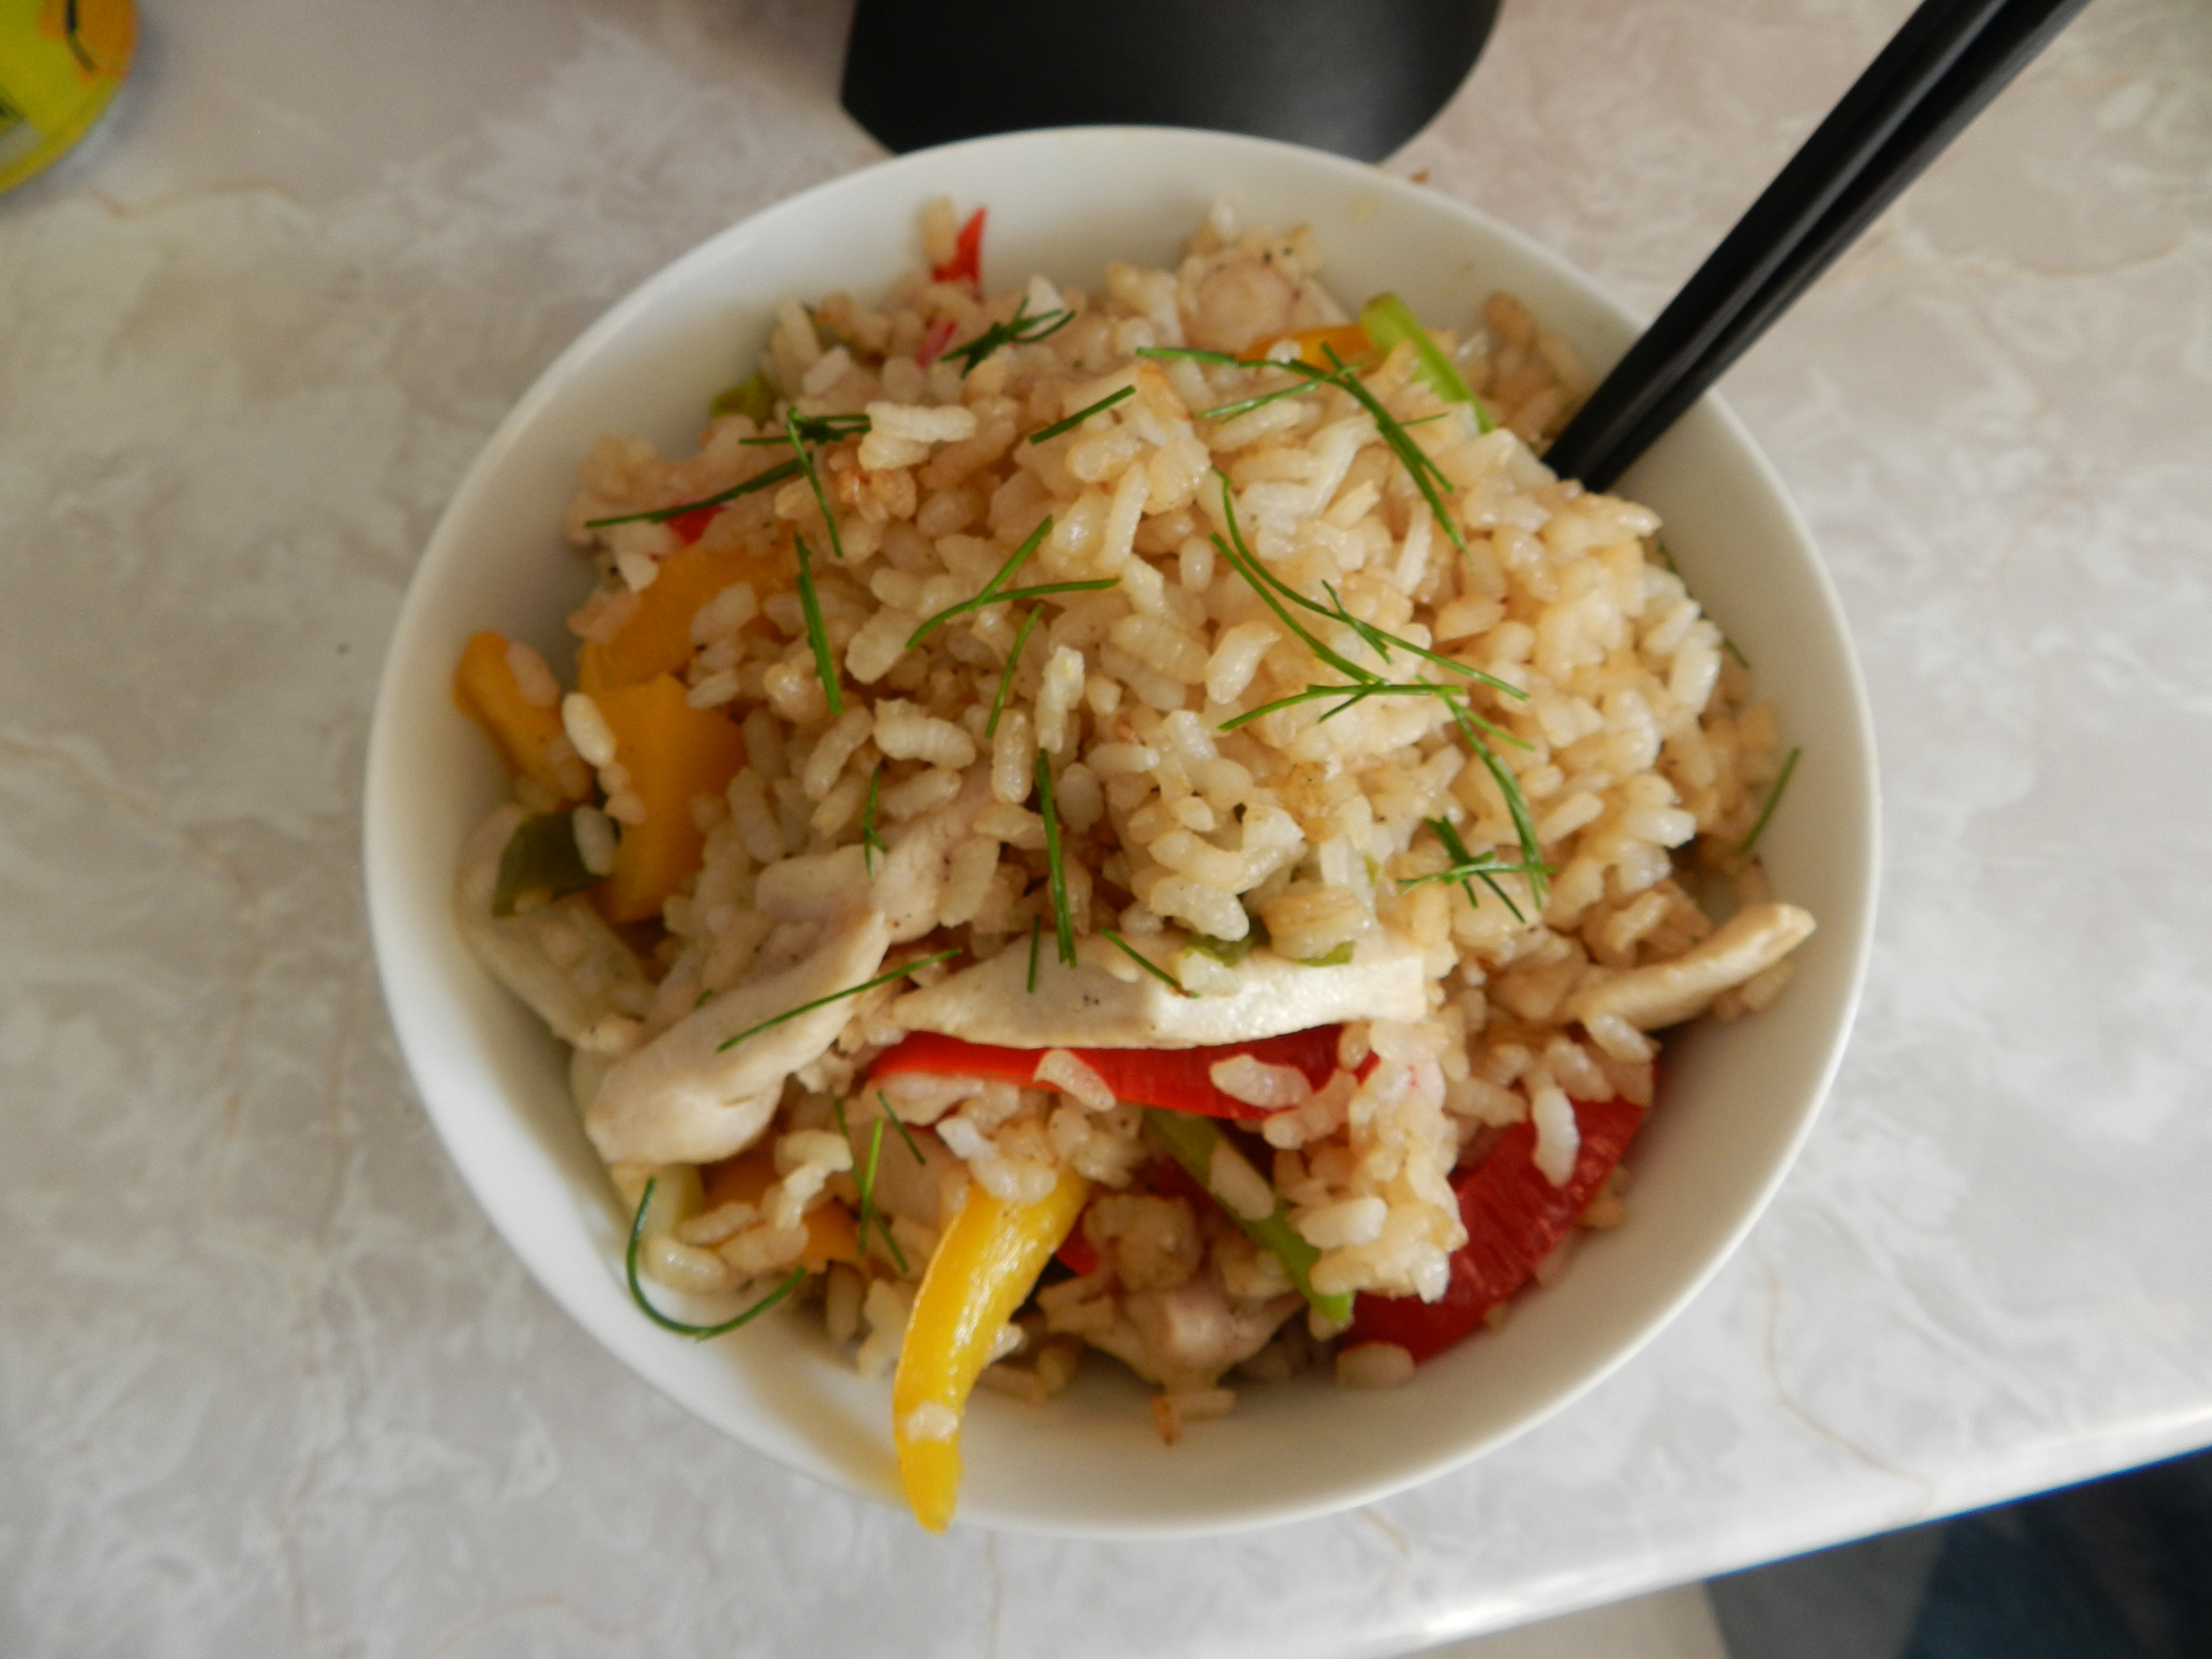 [COCINA] osco este arroz oriental con pollo y verduras???